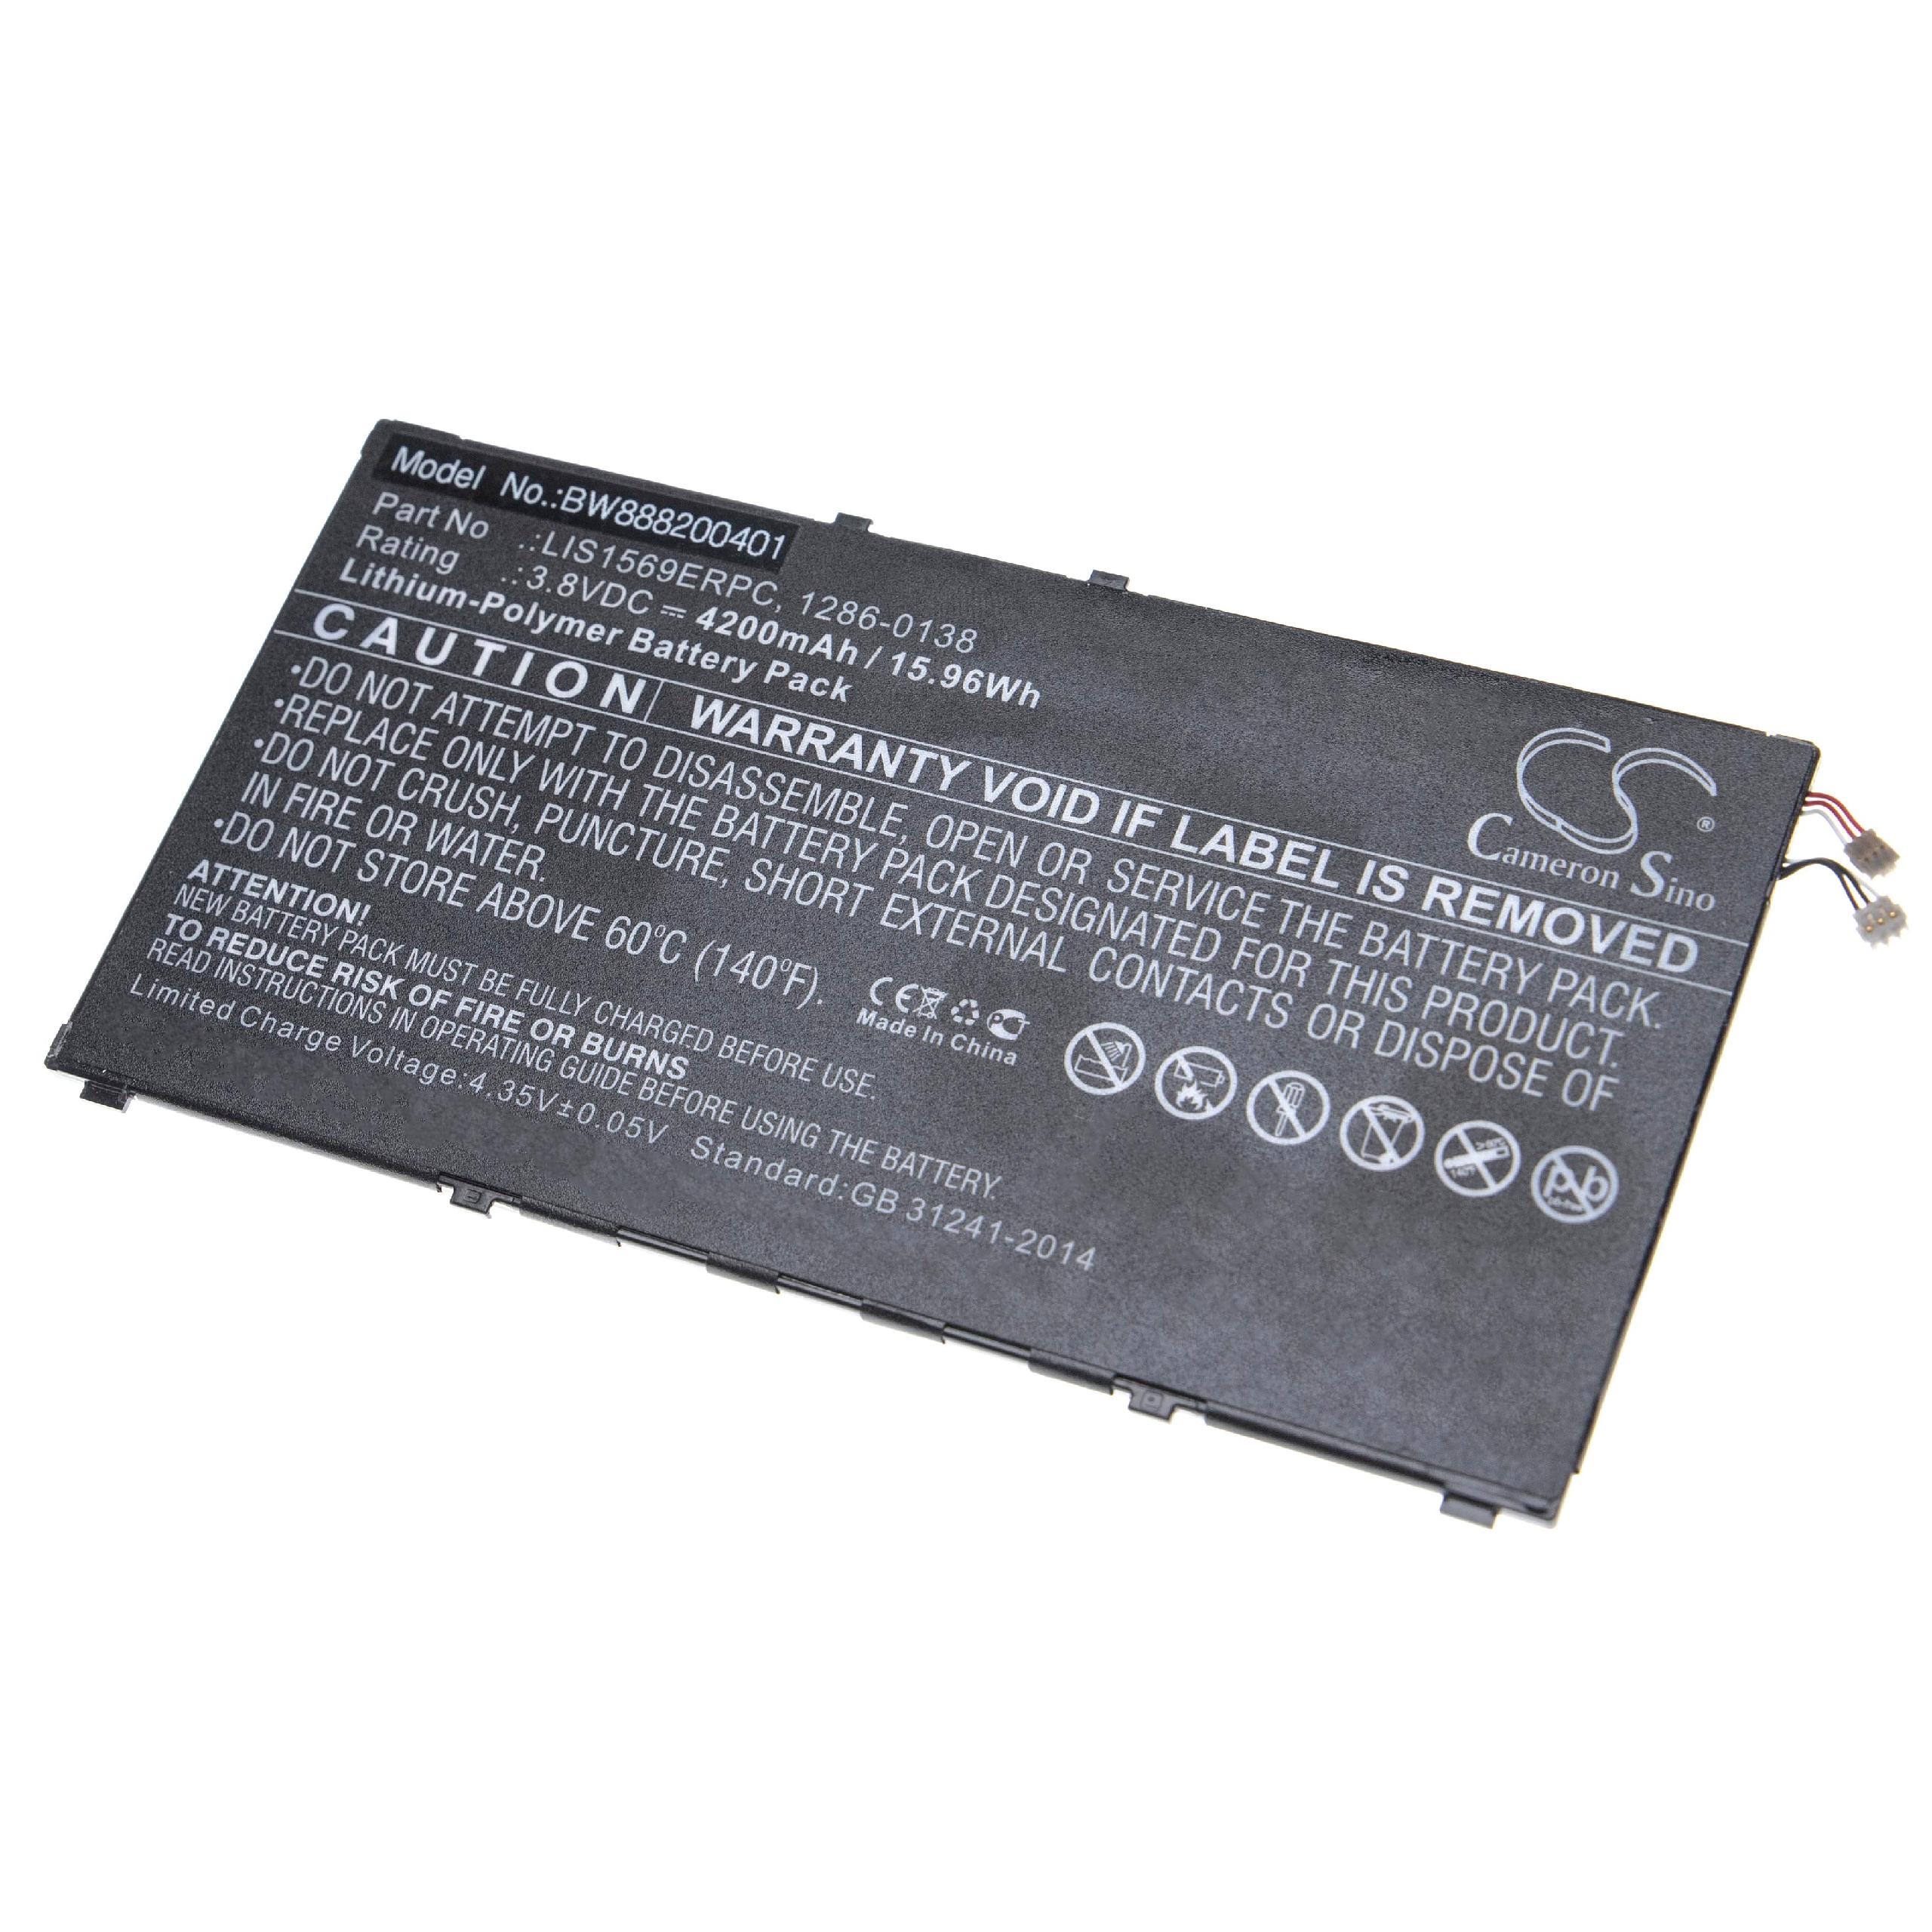 Batteria sostituisce Sony LIS1569ERPC, 1286-0138 per cellulare Sony - 4200mAh 3,8V Li-Poly